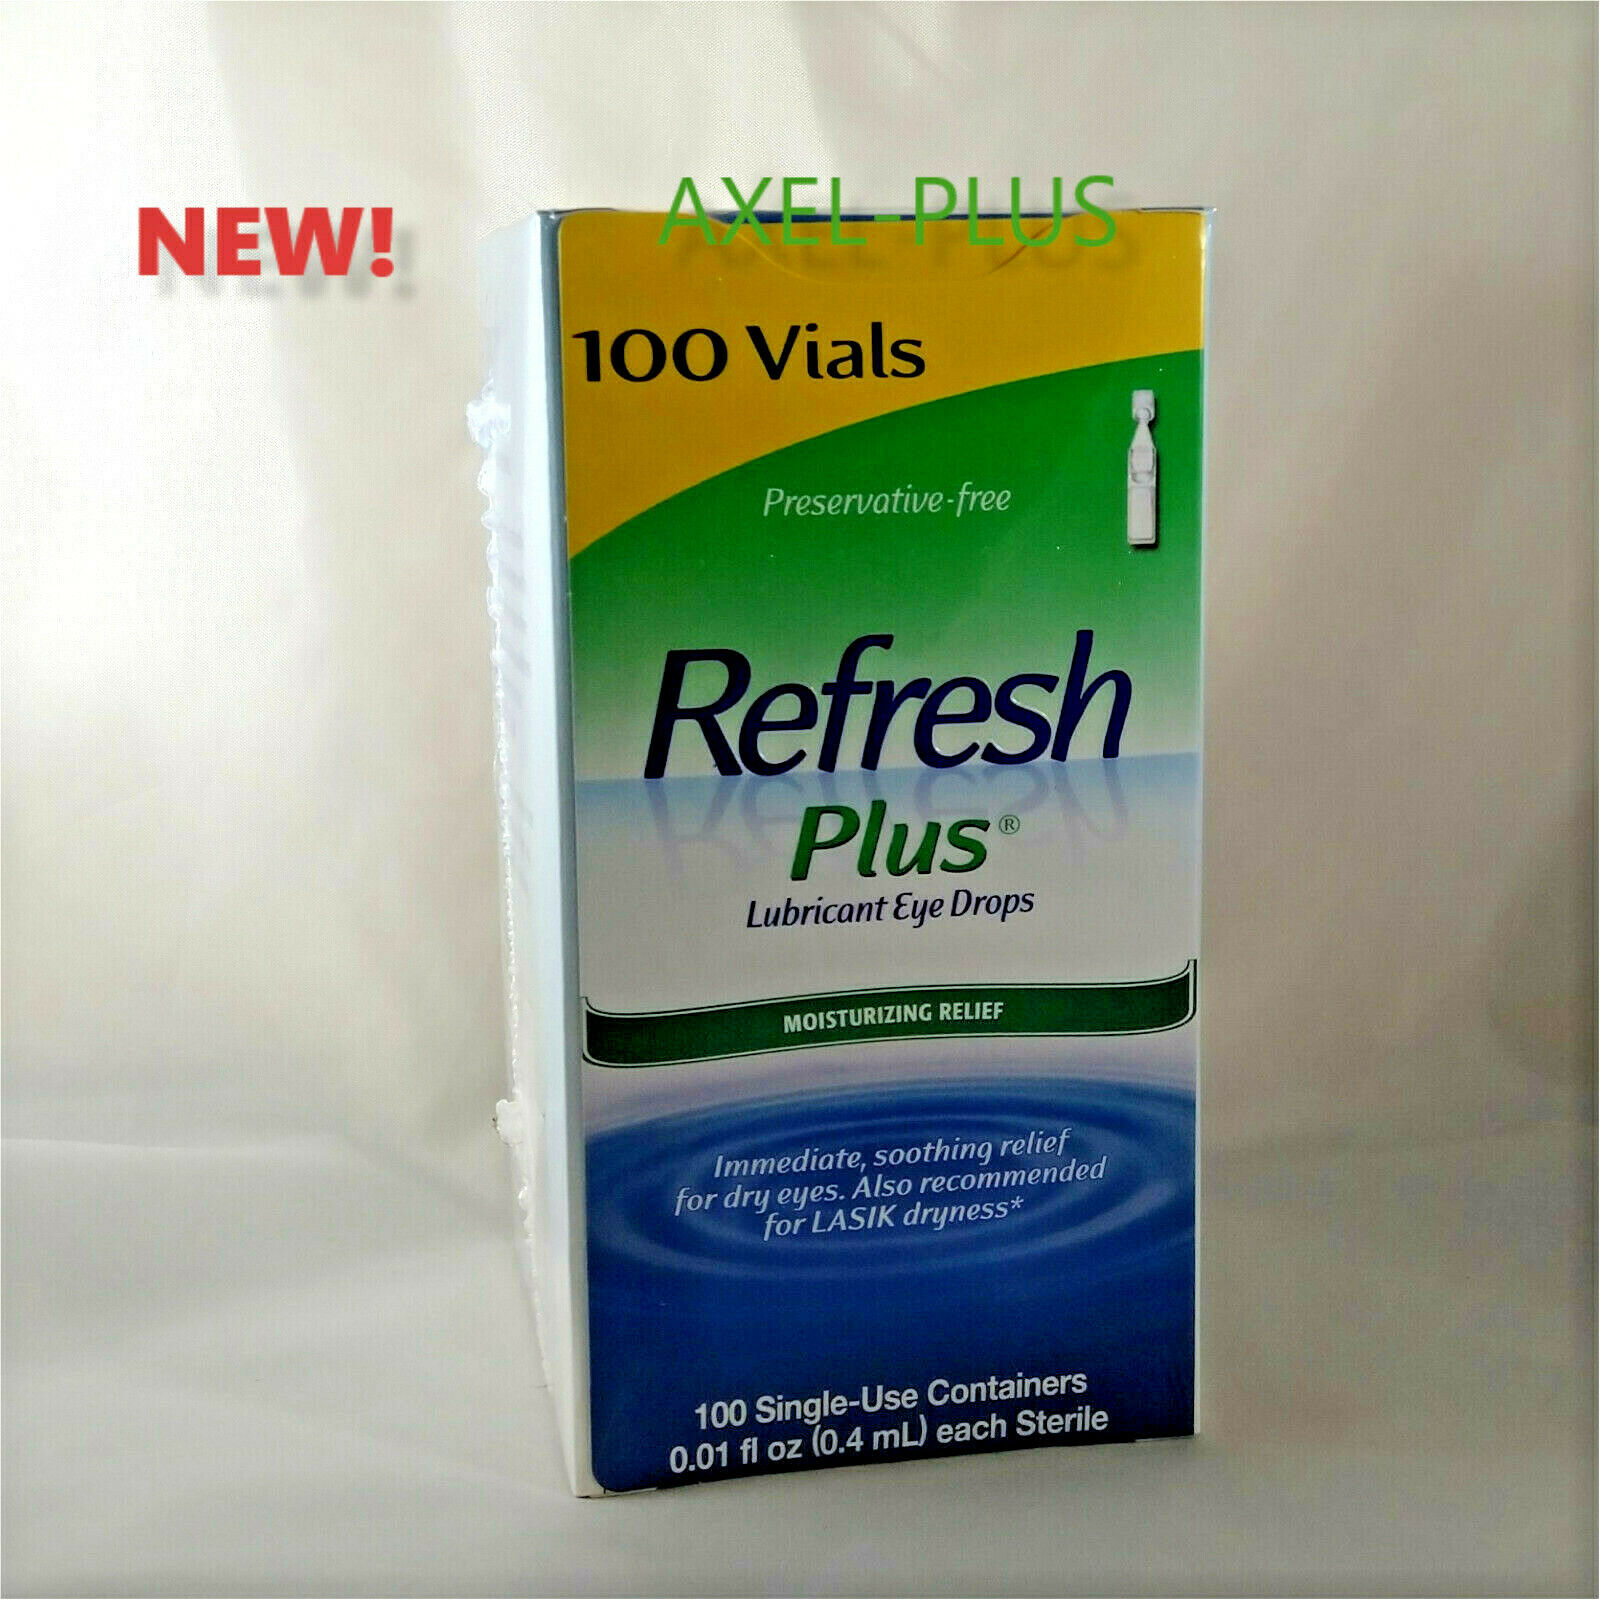 Refresh Plus Lubricant Eye Drops,  Moisturizing Relief, 100 Single Vials